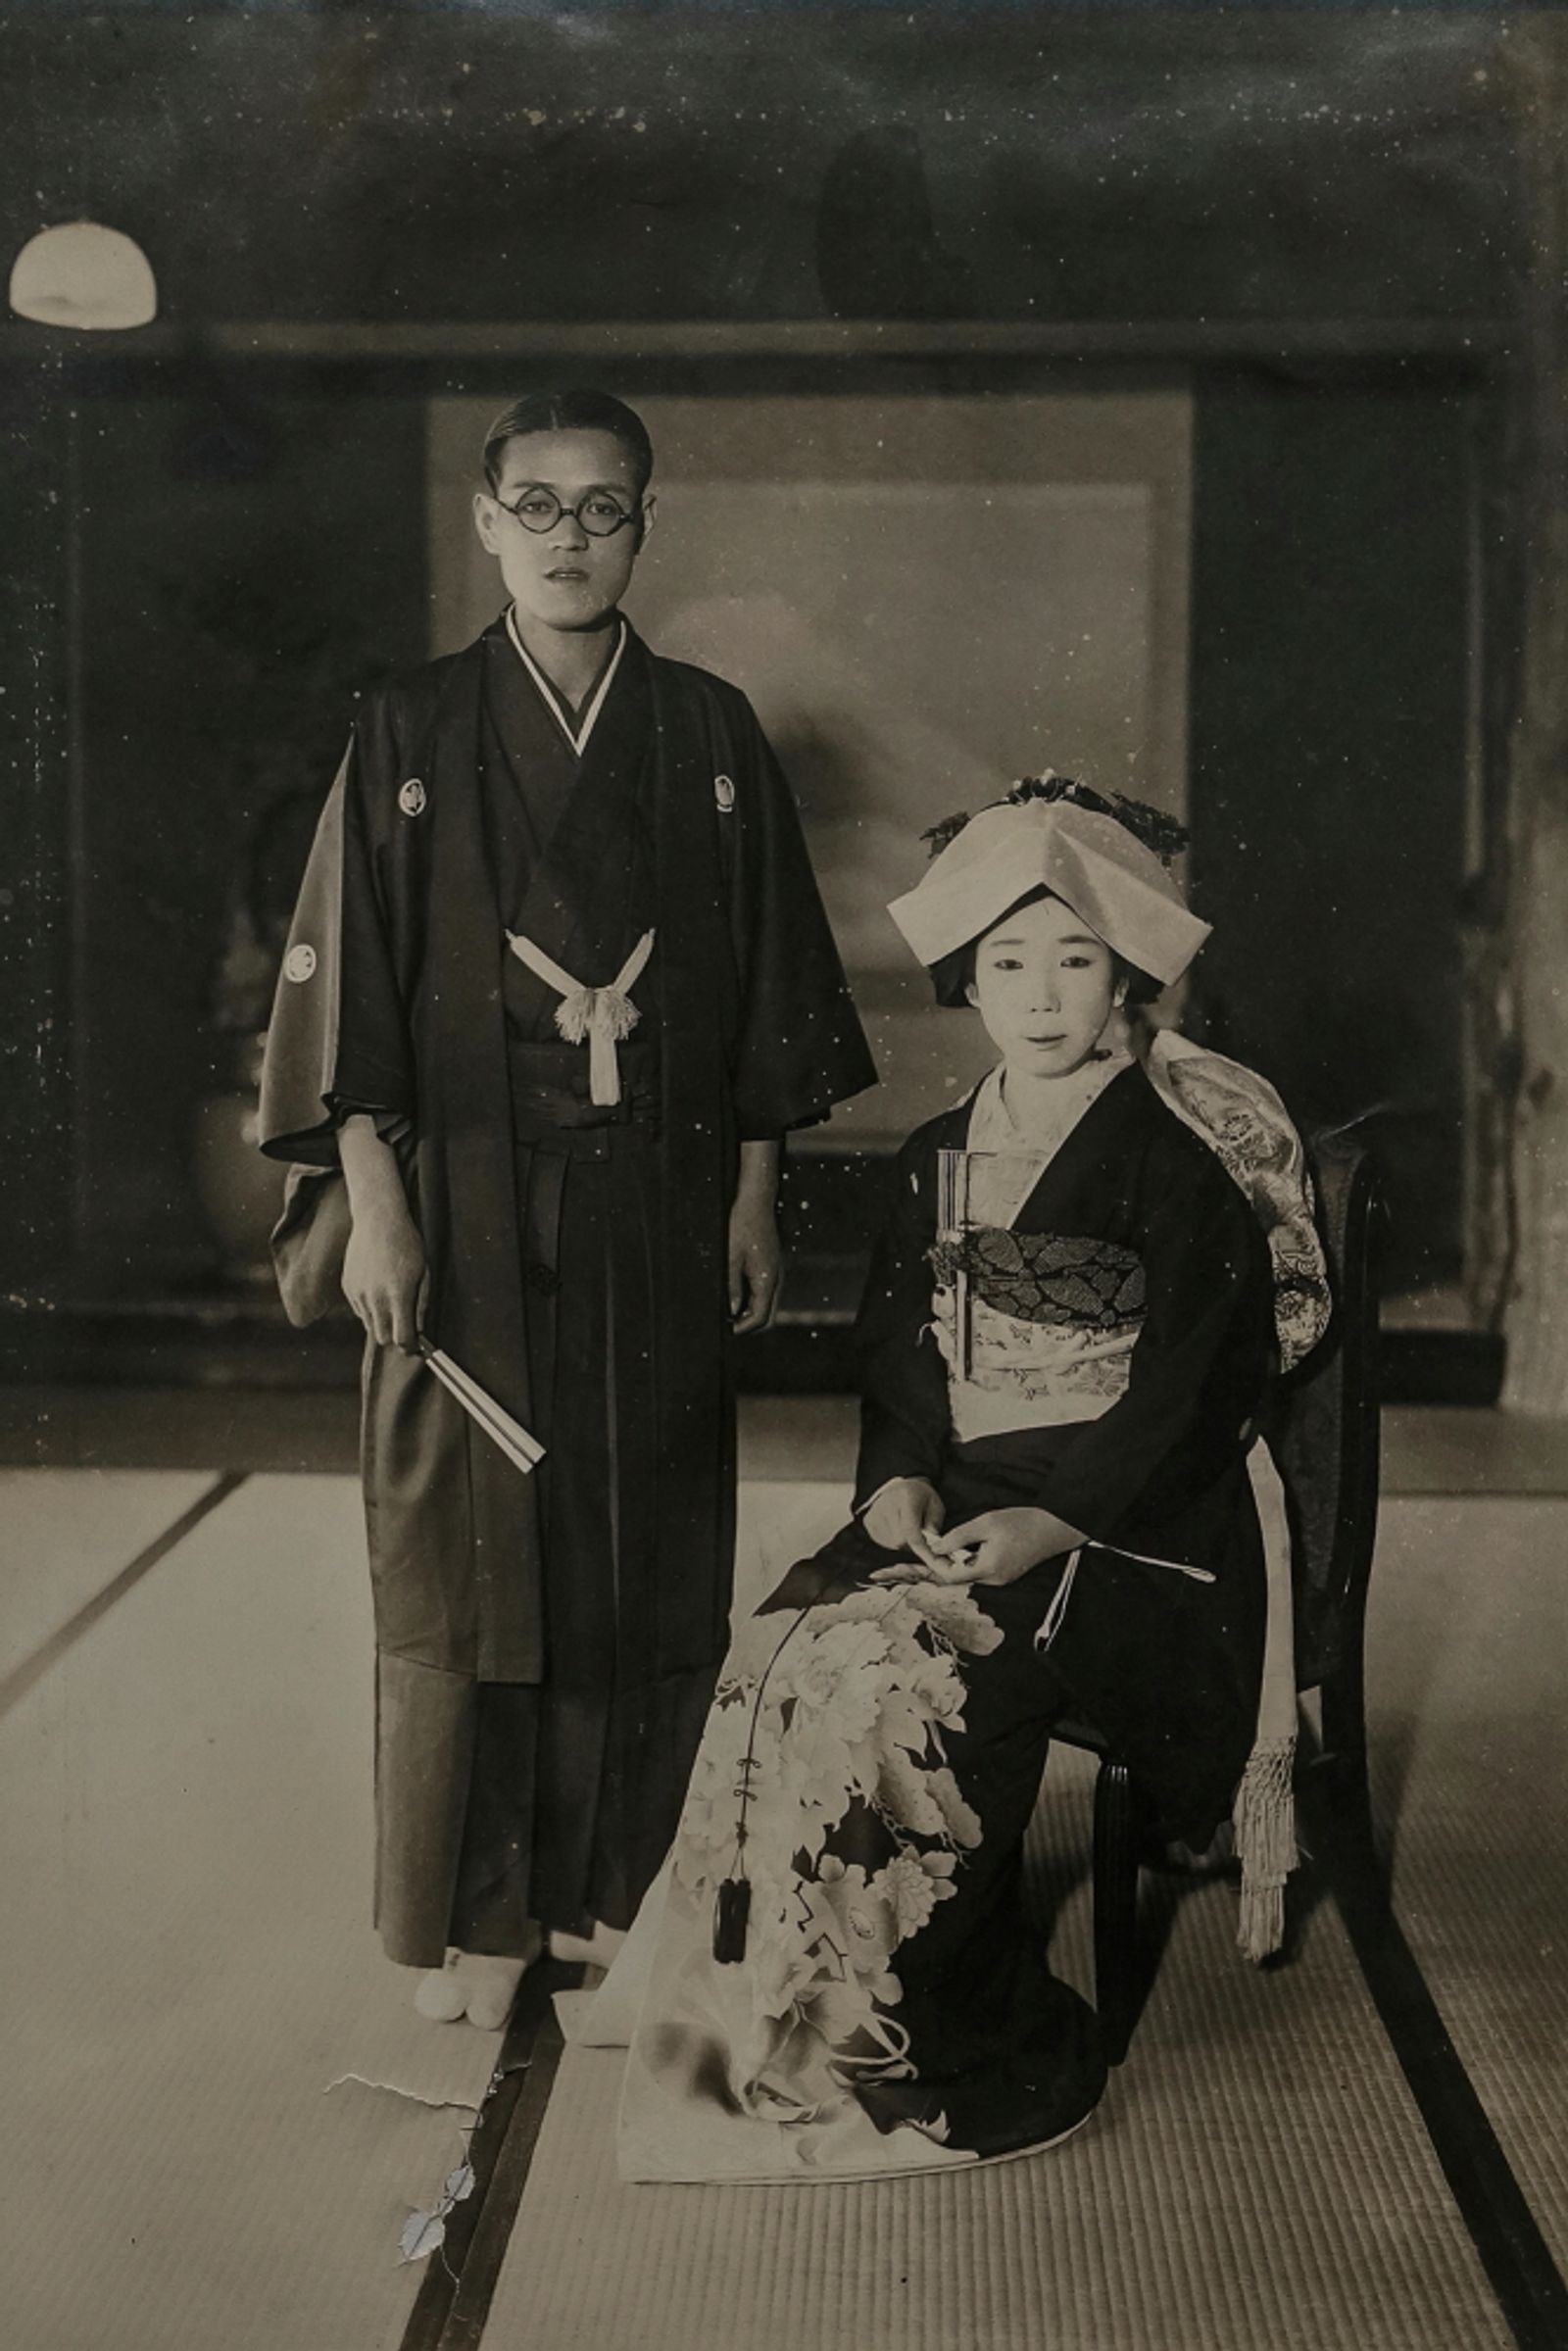 © Kai Yokoyama - My grandparents had an arranged marriage in 1935.